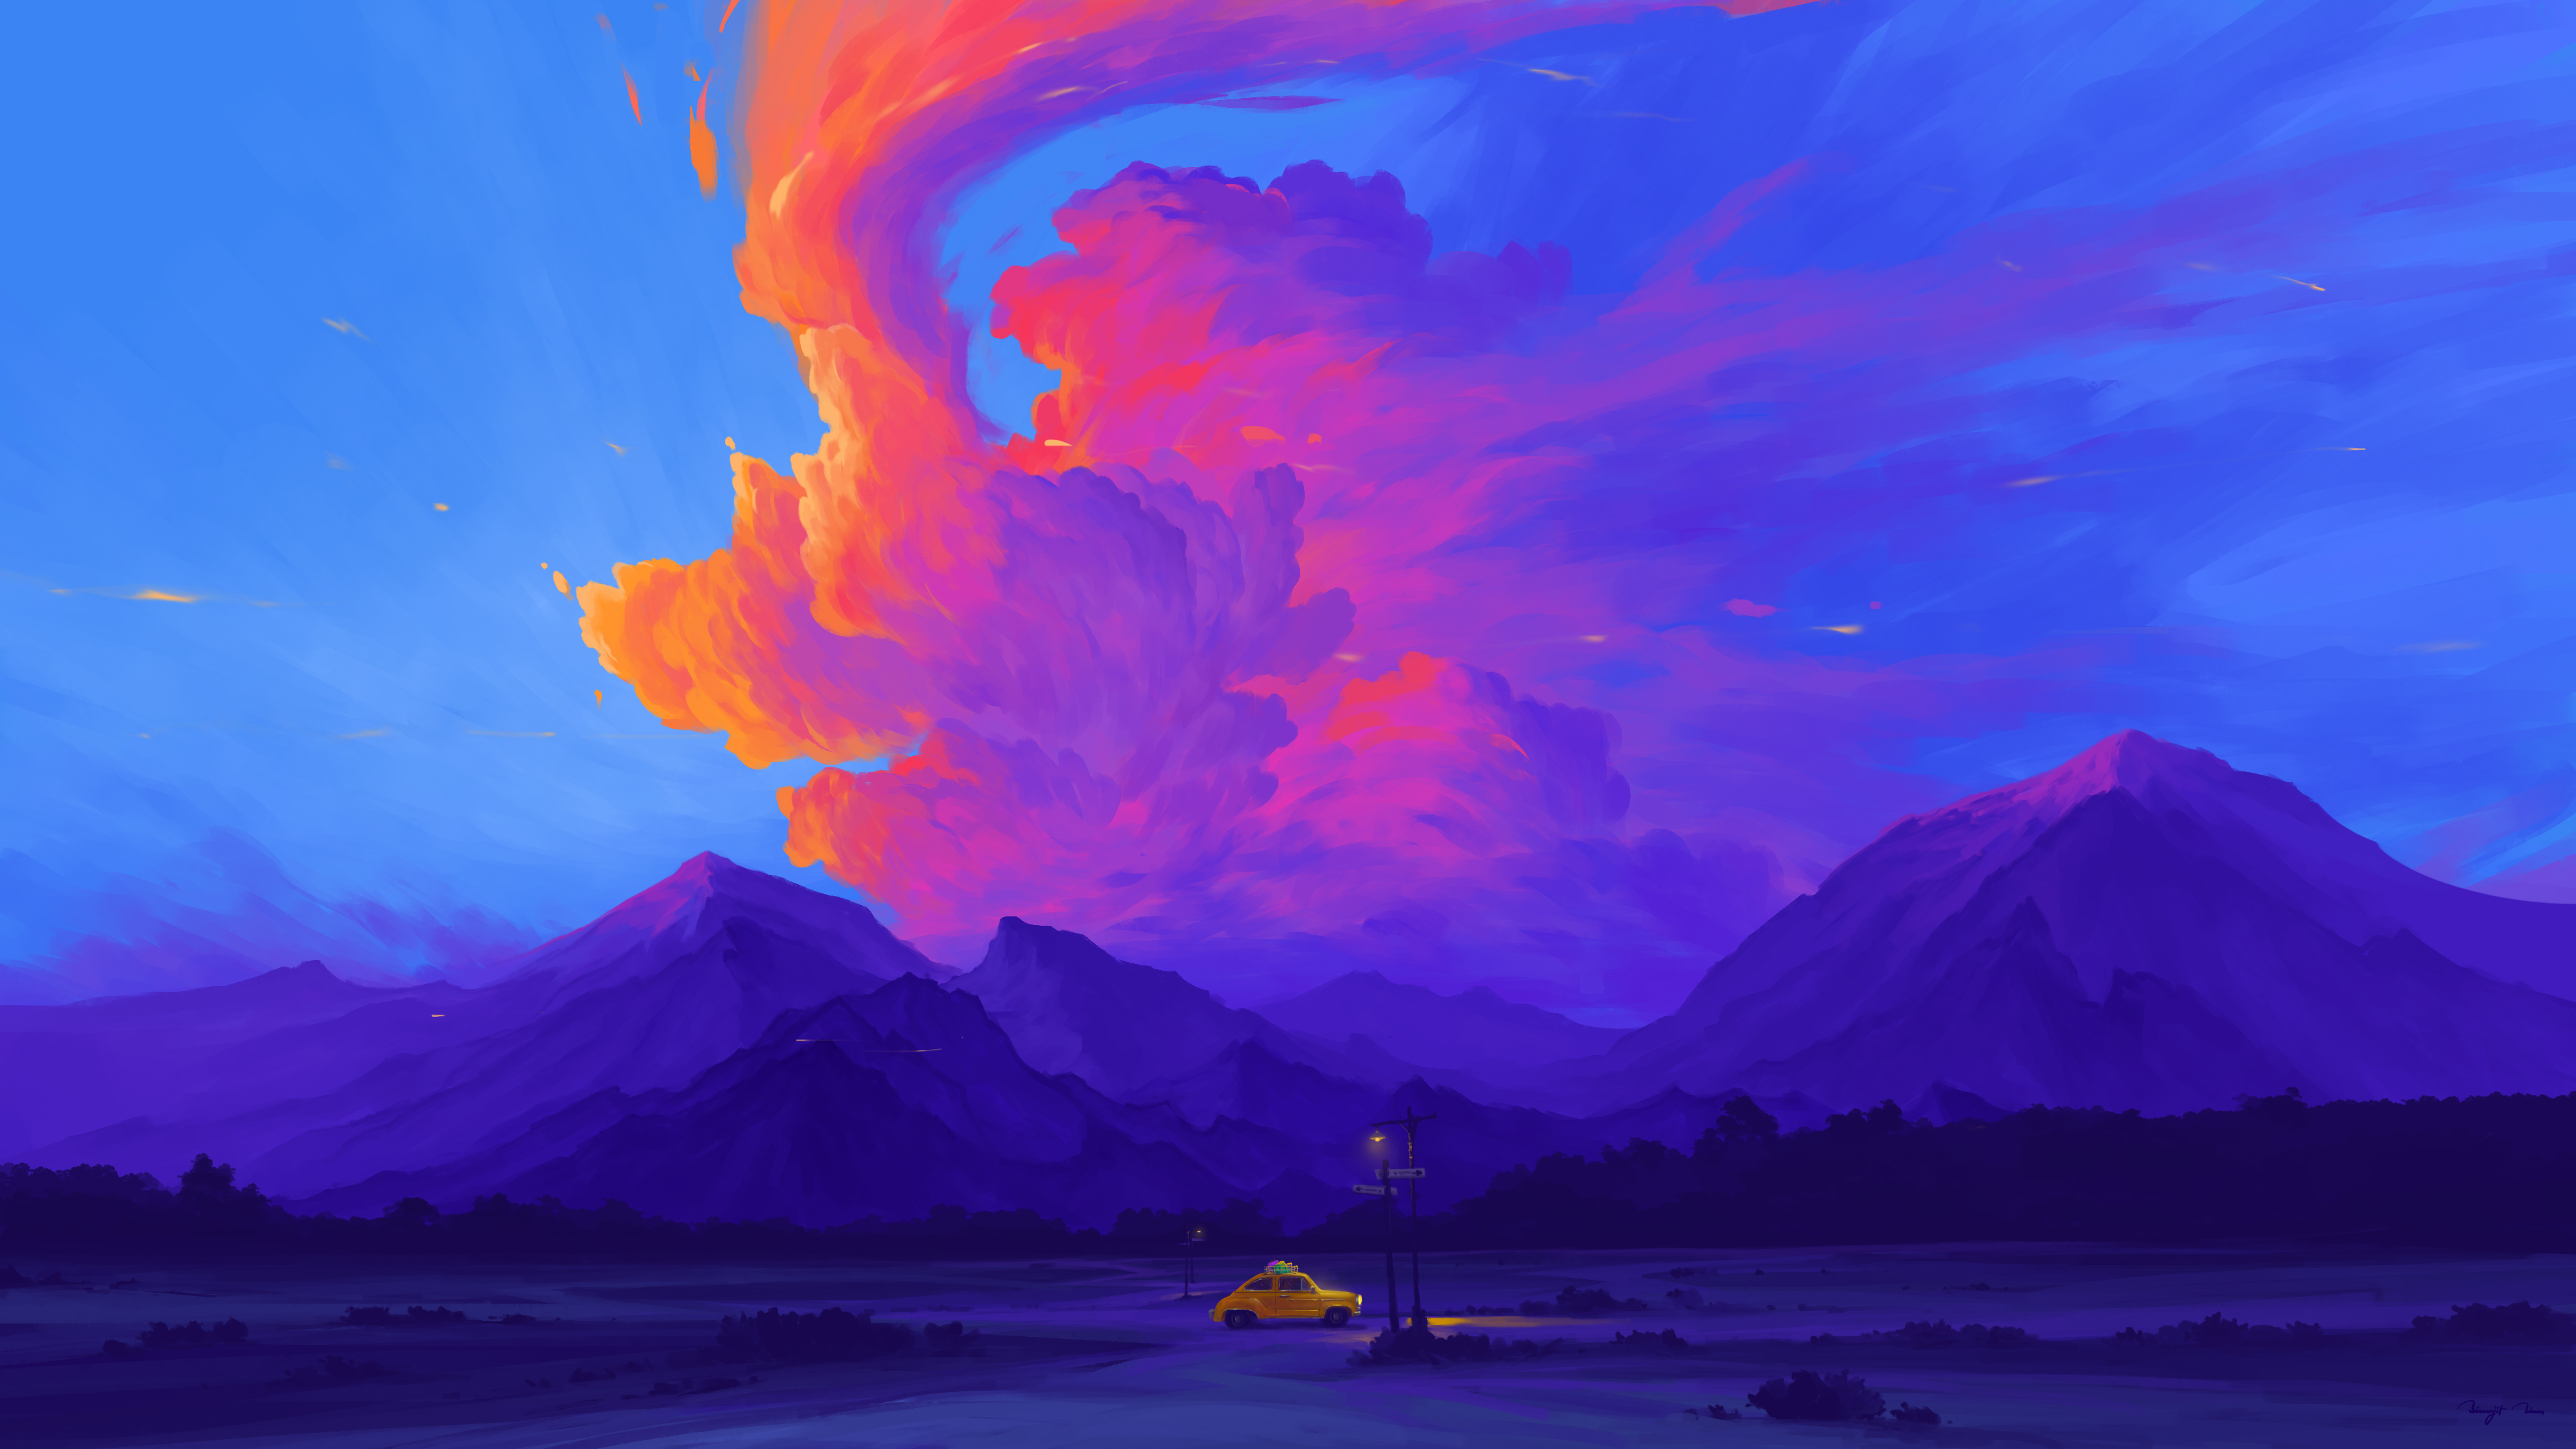 BisBiswas Digital Art Artwork Illustration Landscape Nature Mountains Clouds Vehicle Car Signature F 3840x2160